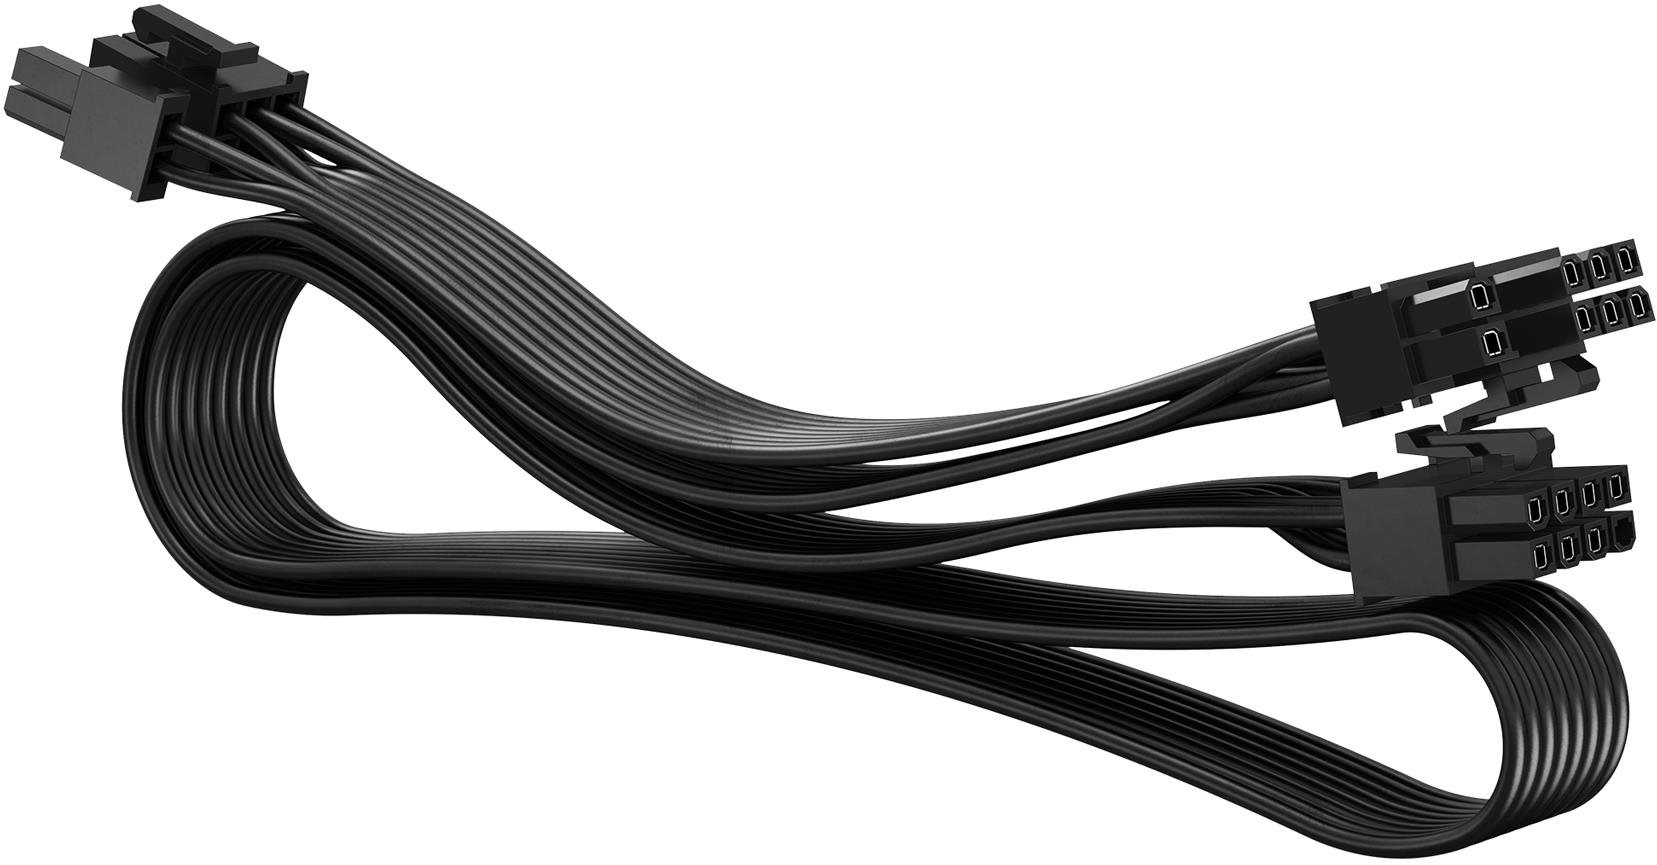 Fractal Design PCI-E 6+2 pin x2 modular cable